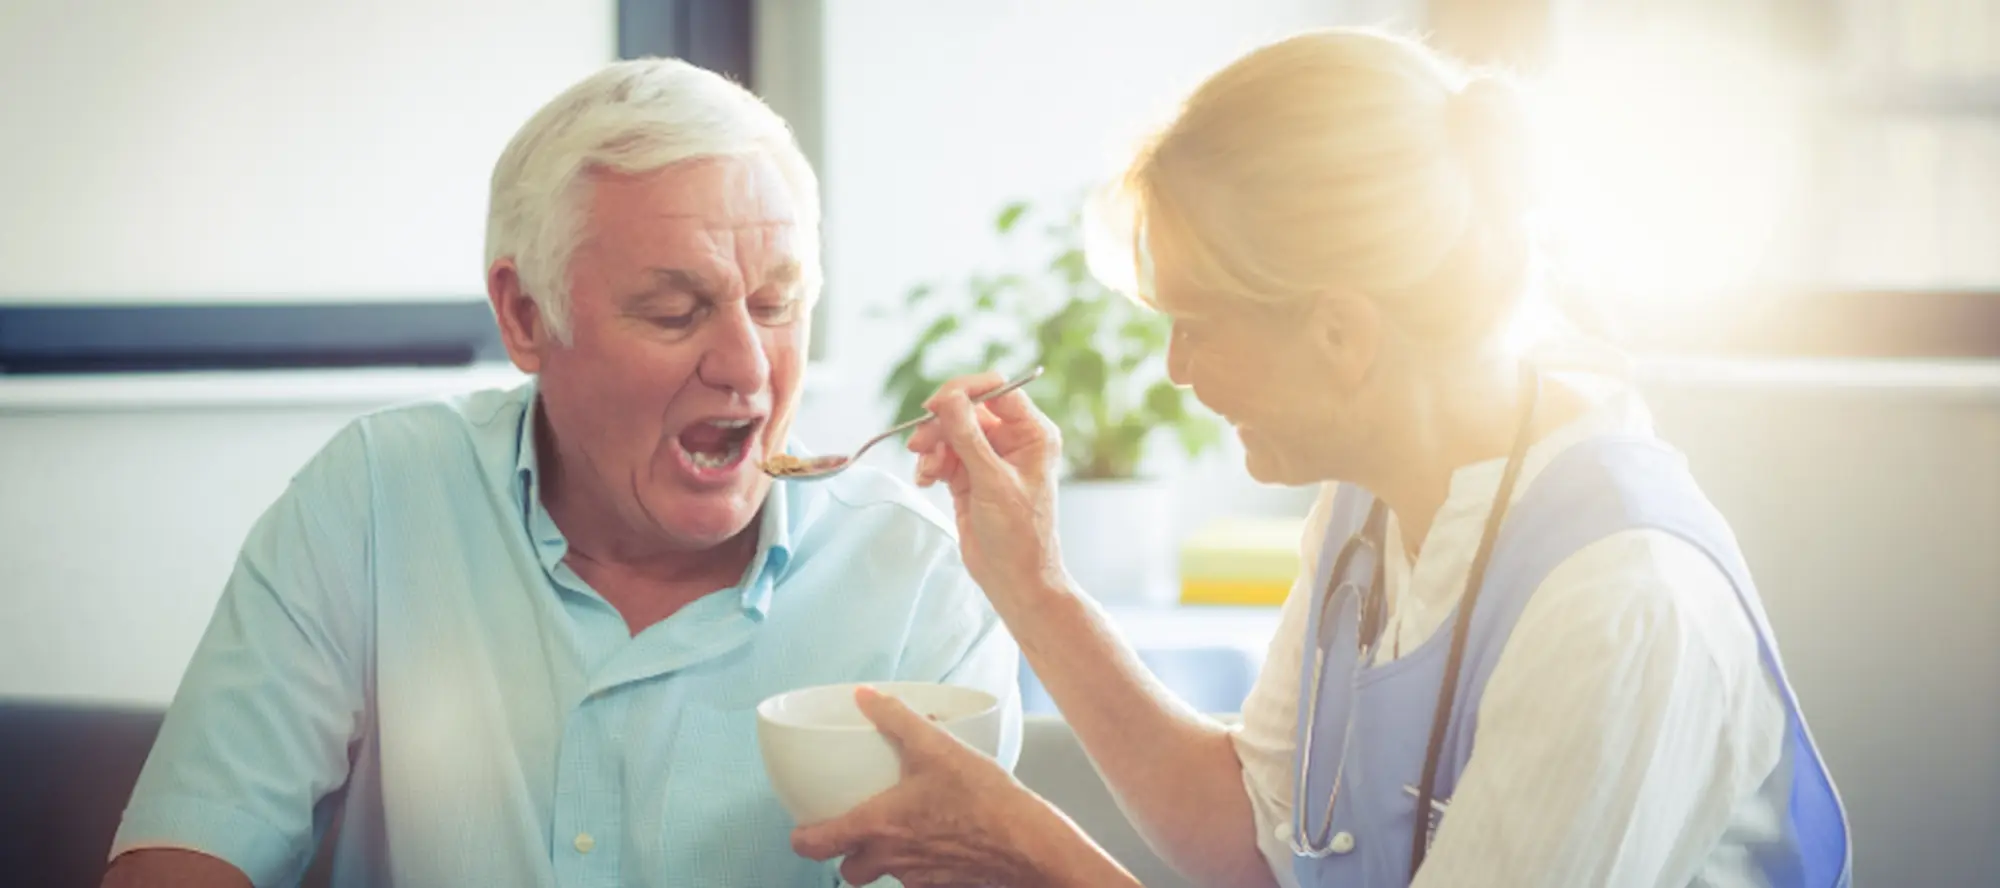 Carer feeding elderly patient